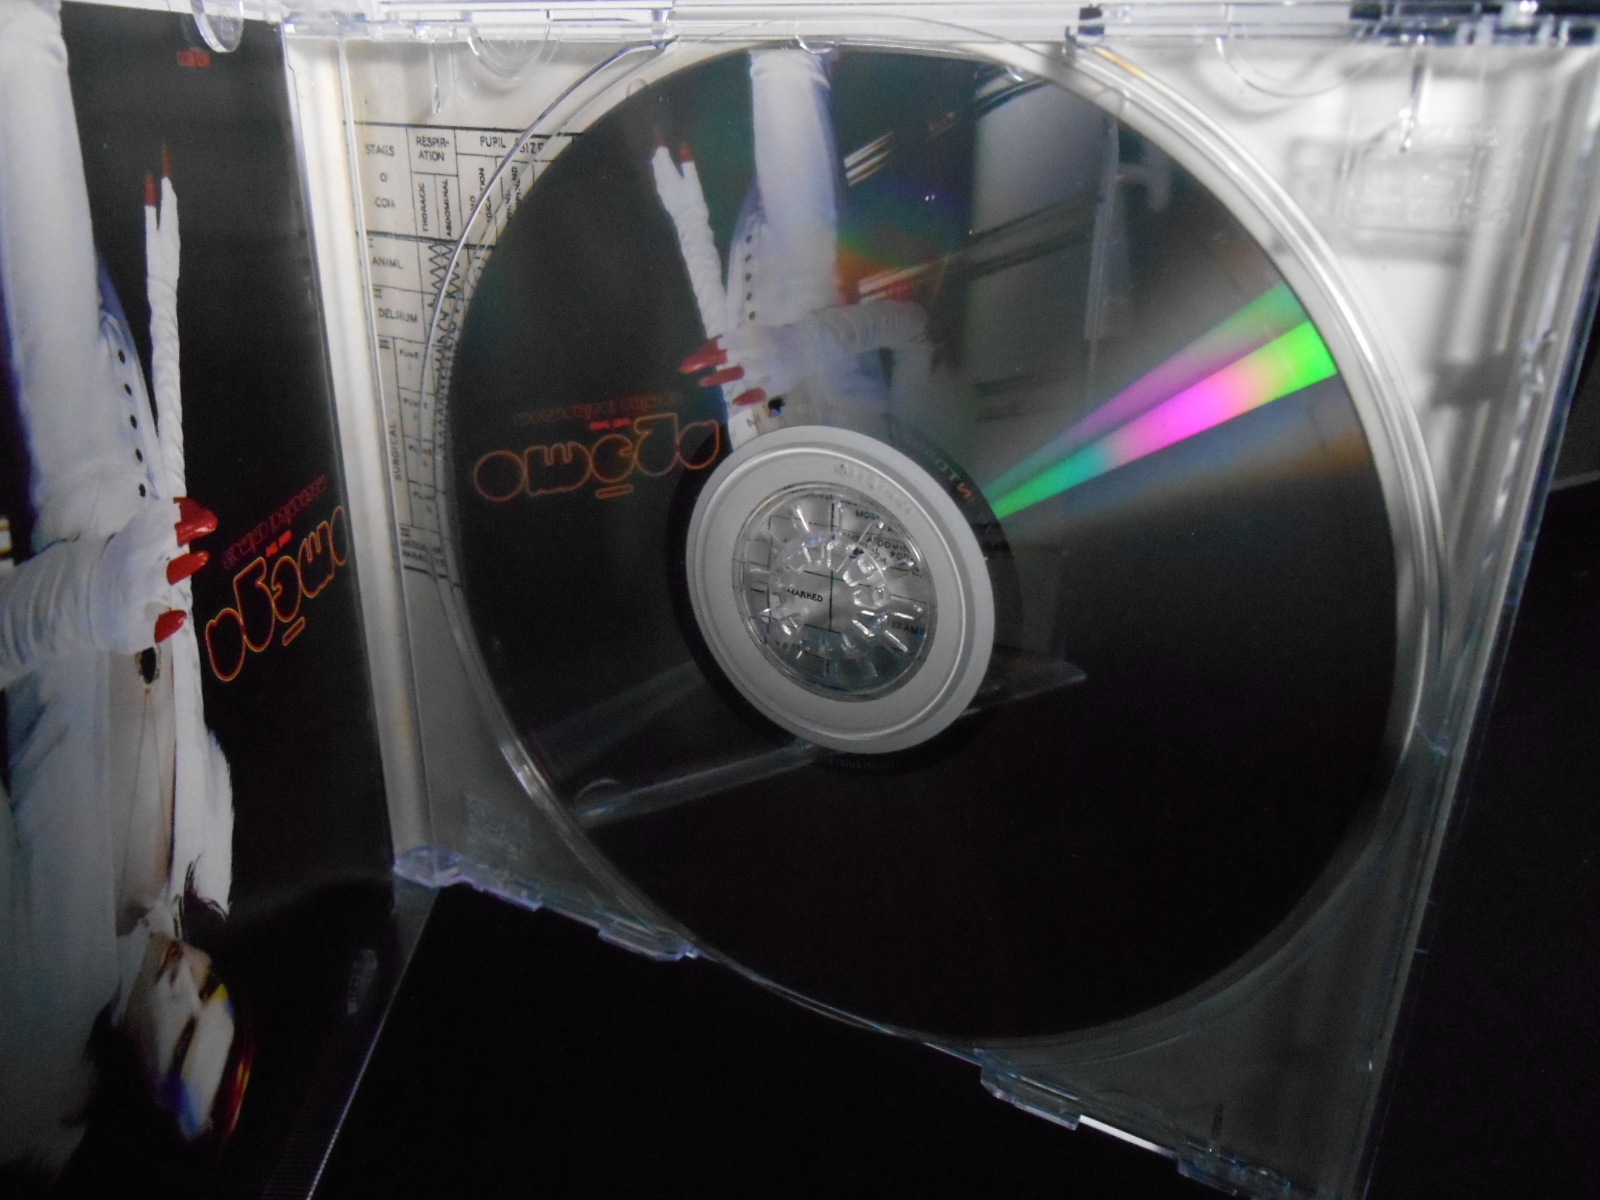 CD - Marilyn Manson - Mechanical Animals (USA)